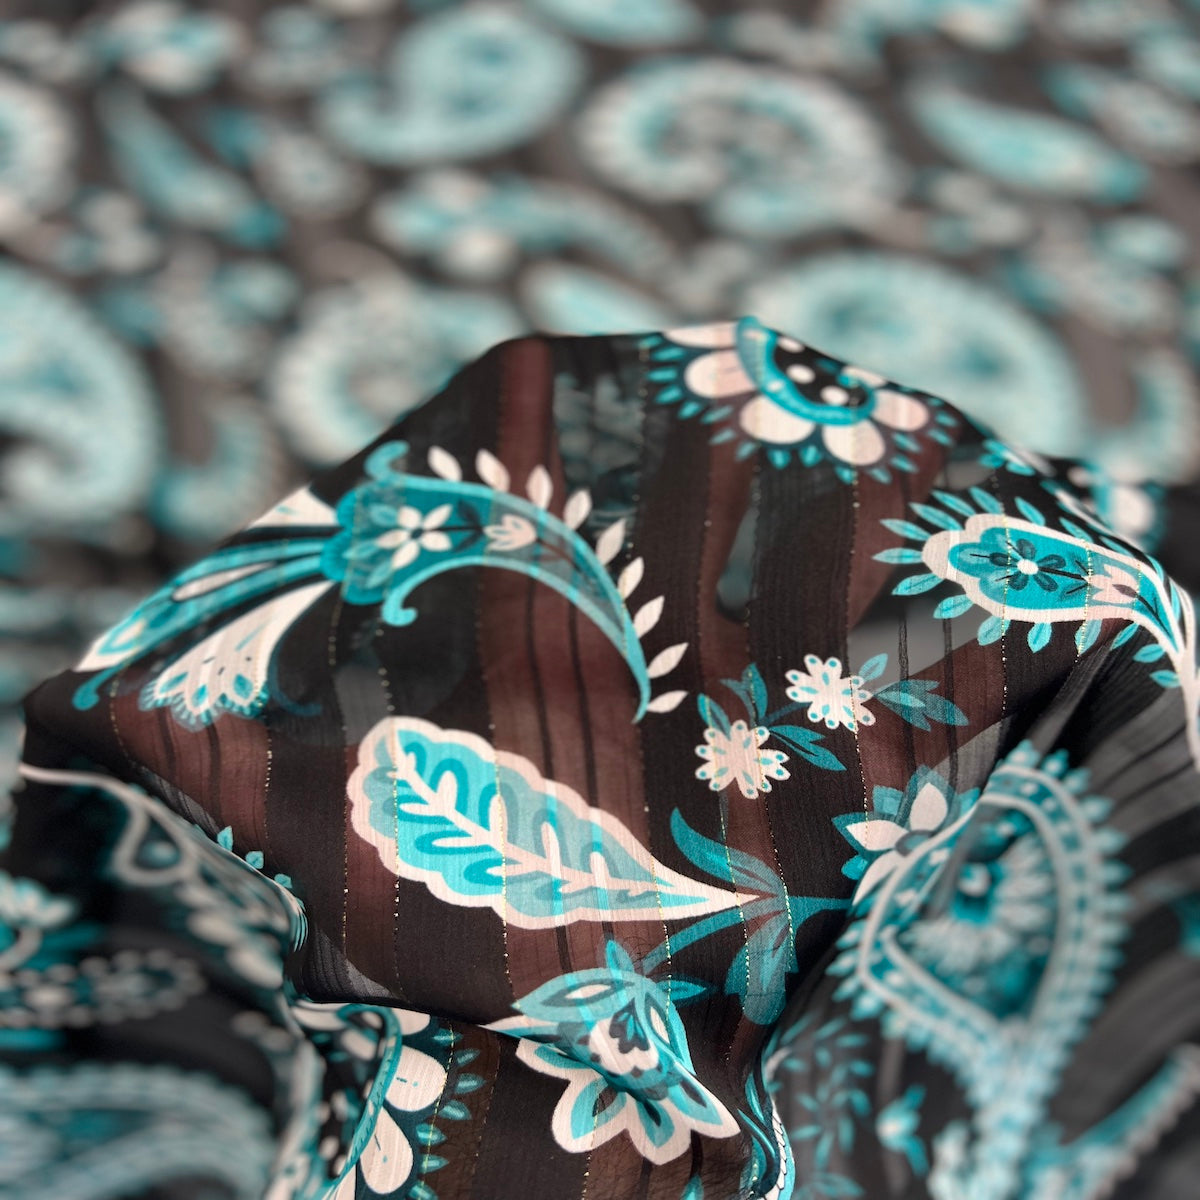 Aqua Blue Paisley Print Metallic Stripe Chiffon Fabric